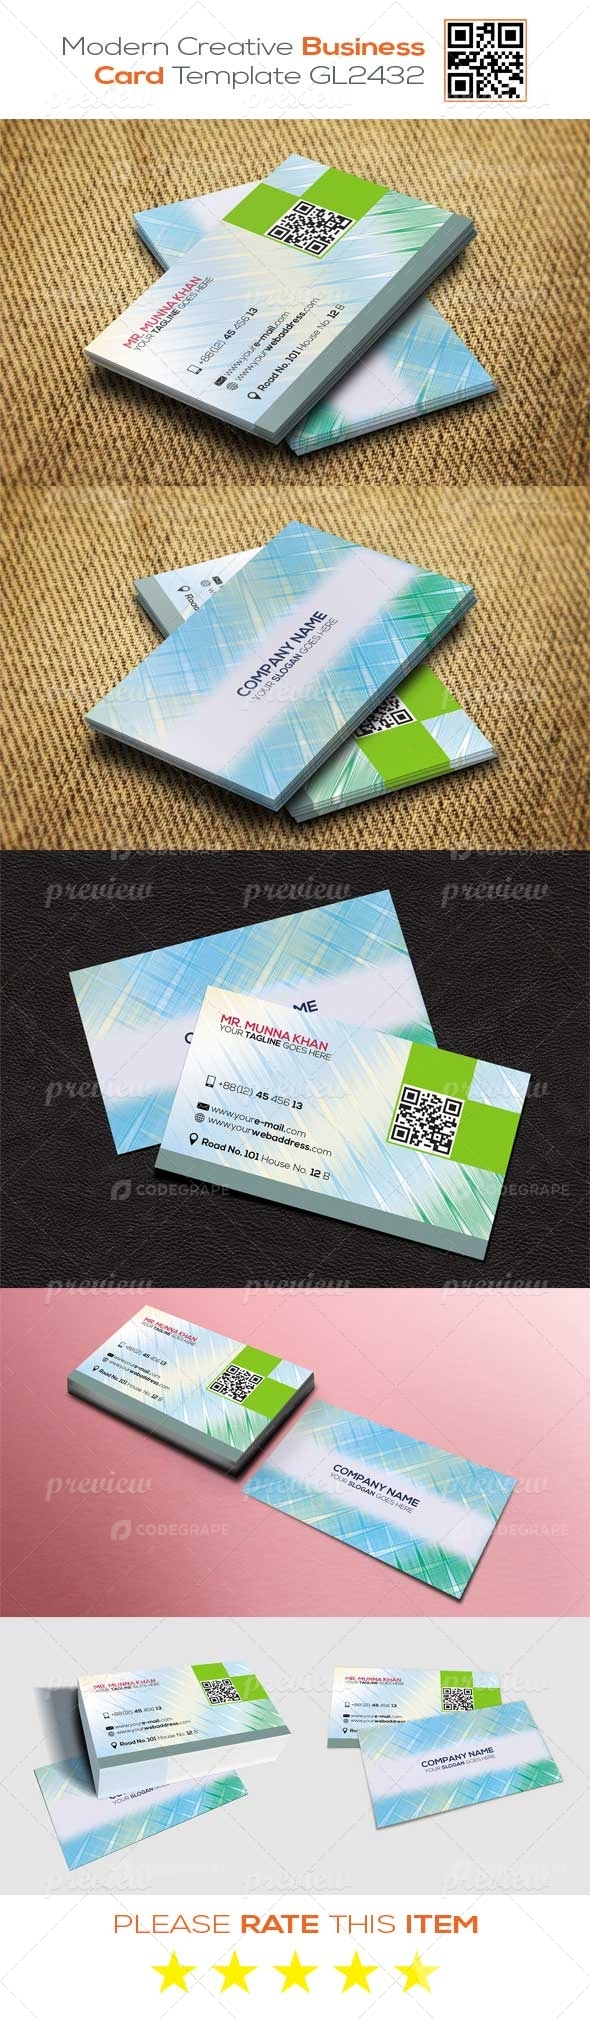 Modern Creative Business Card Template GL2432